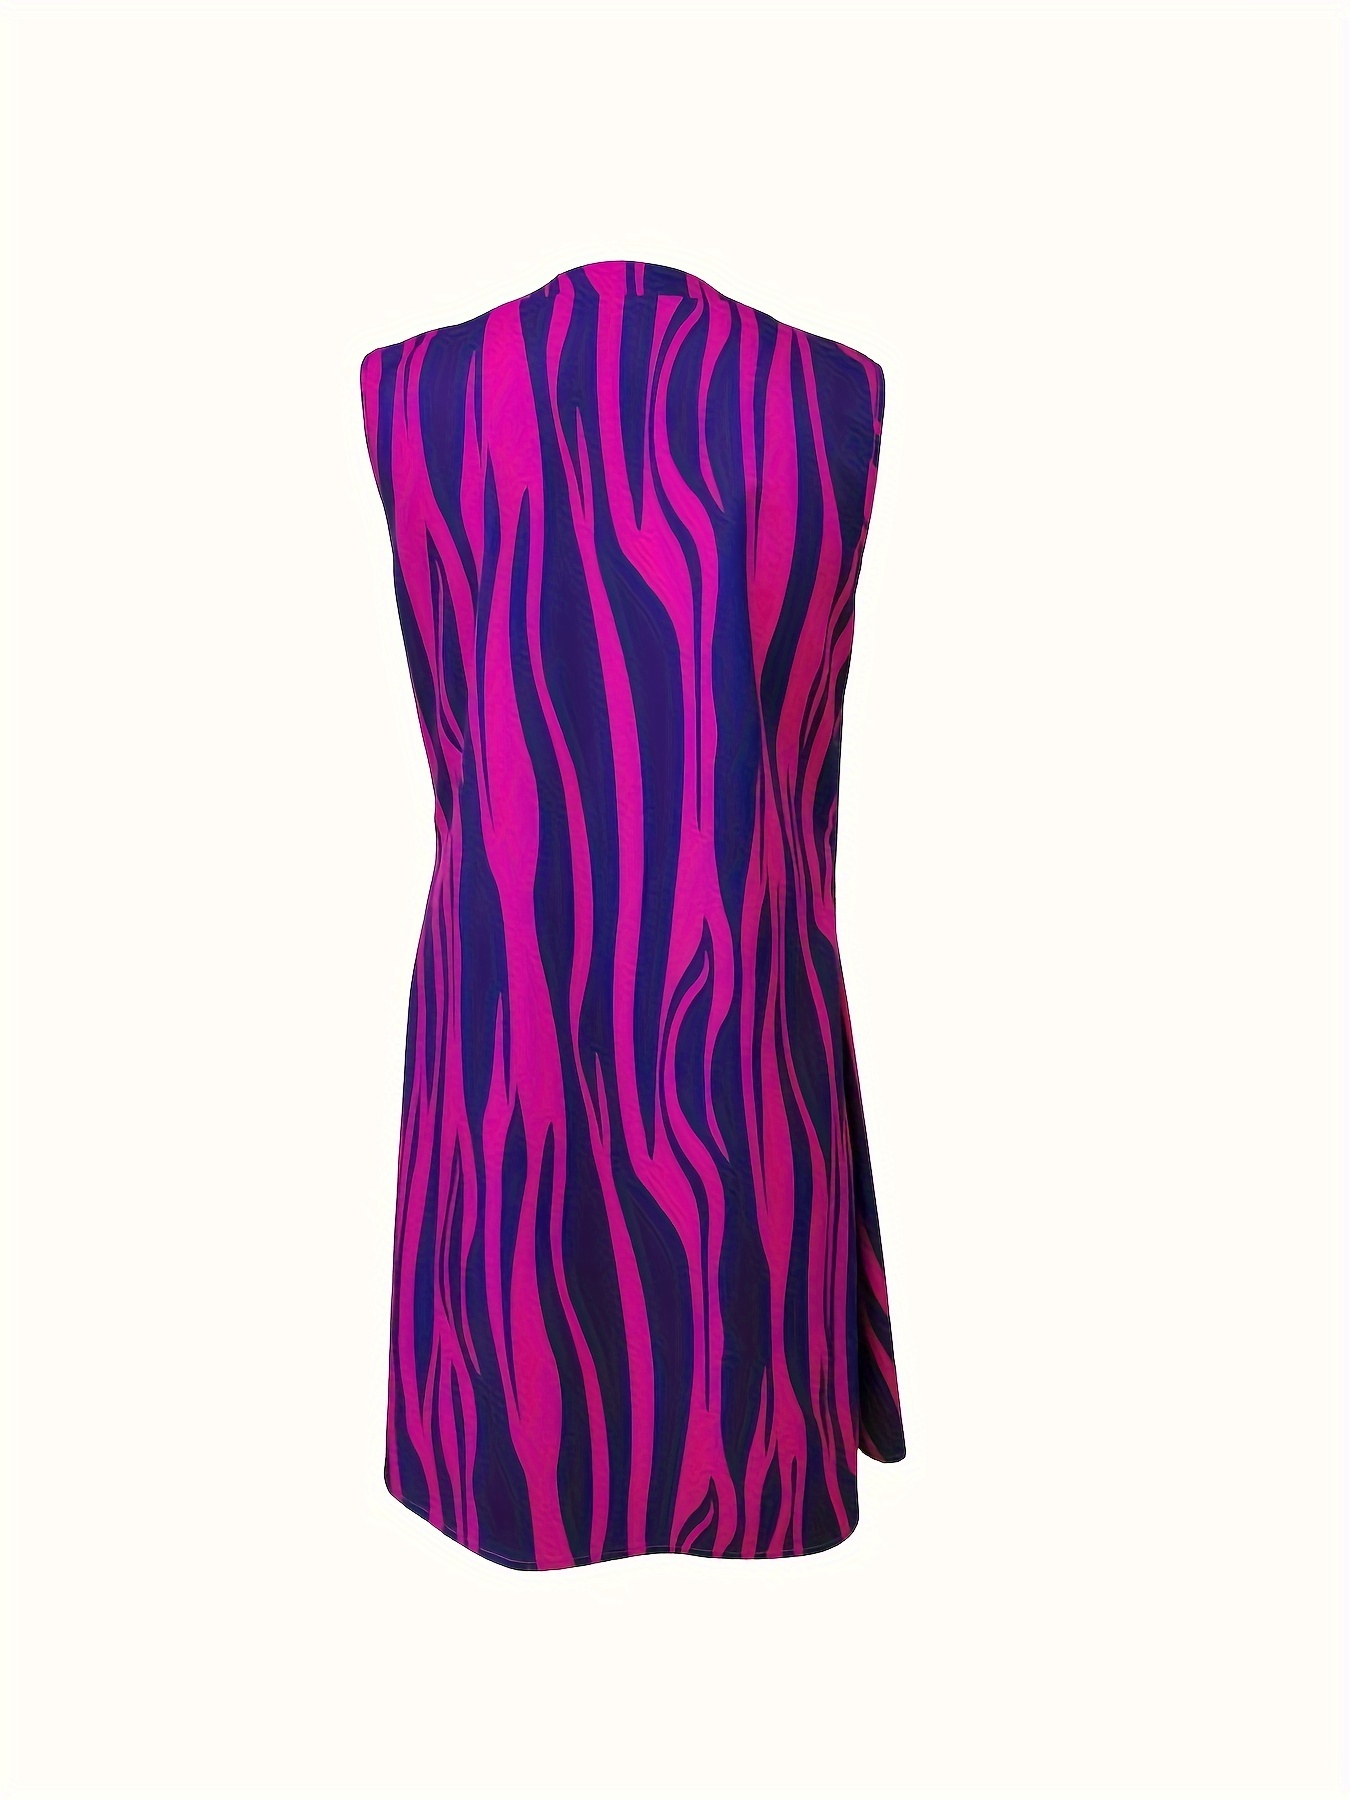 abstract ripple print dress casual v neck sleeveless dress womens clothing details 26